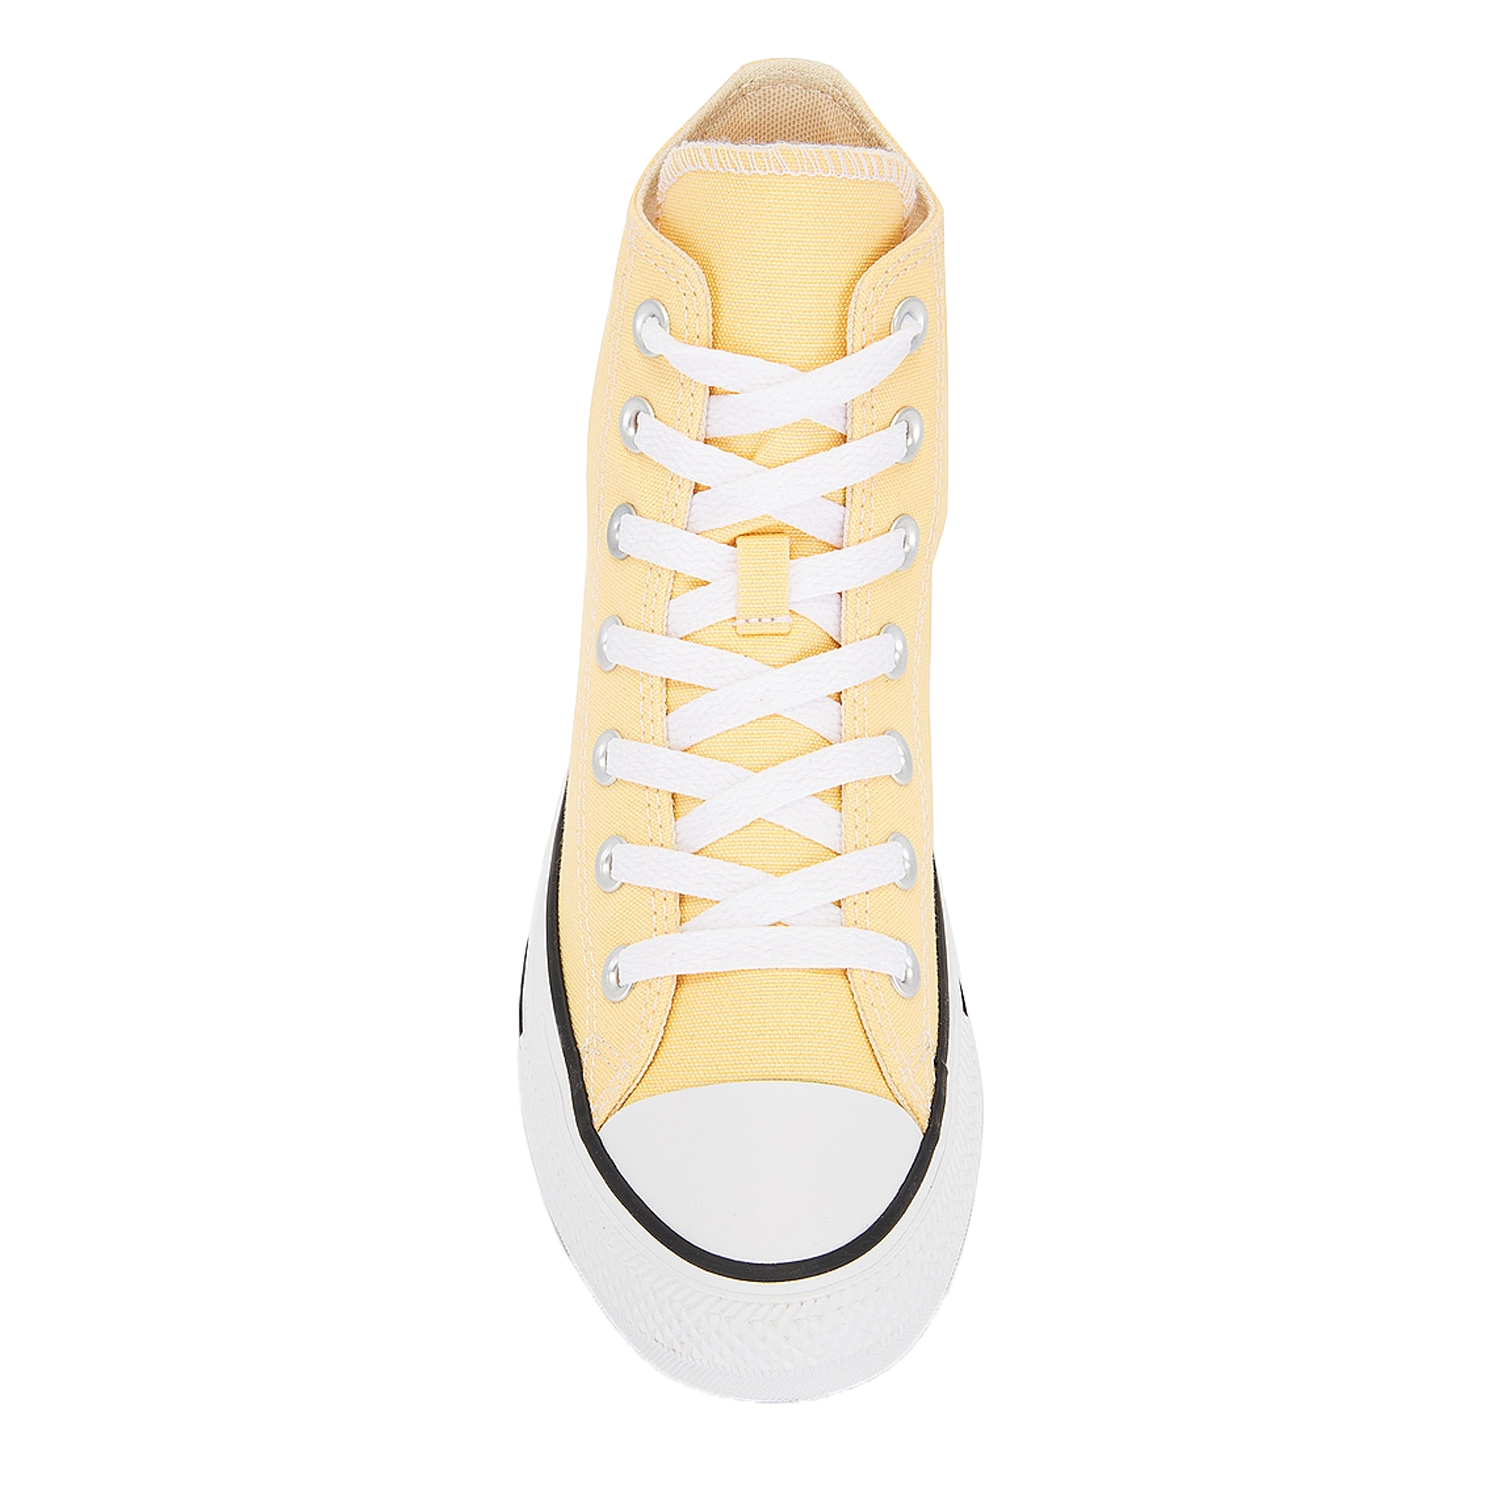 converse-chuck-taylor-all-star-high-shoes-a09826f